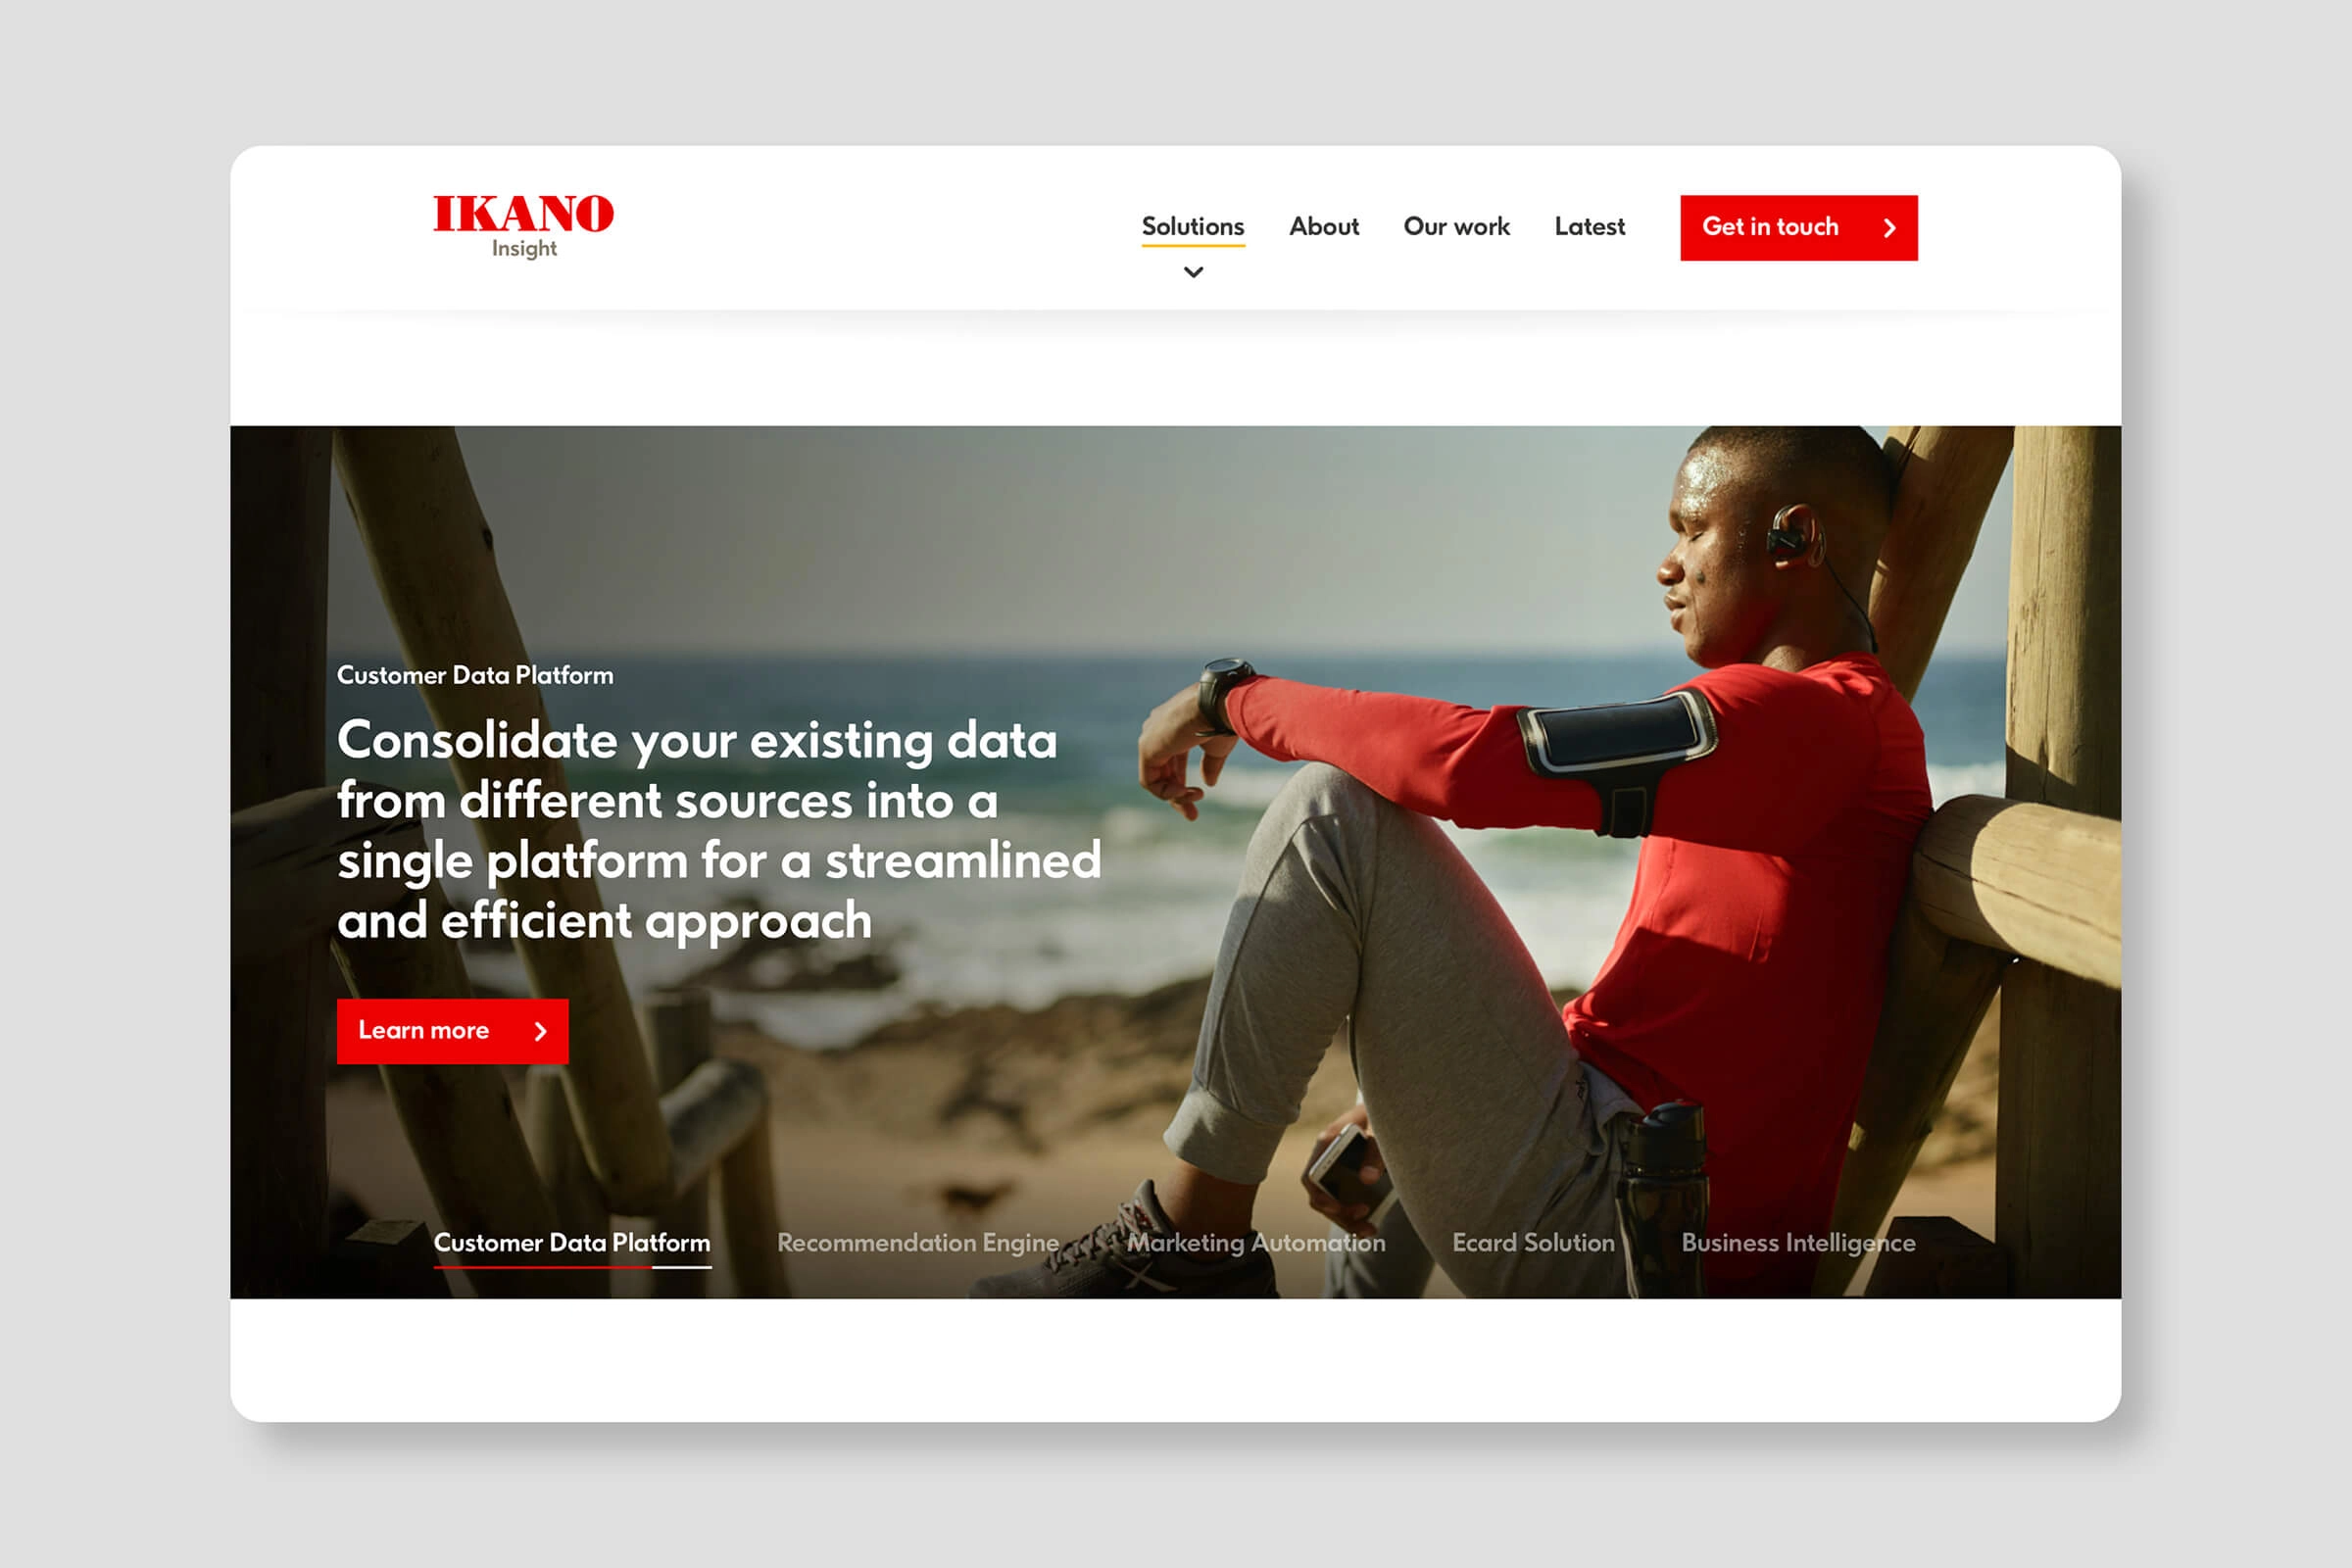 Ikano Website Screenshot - Customer Data Platform